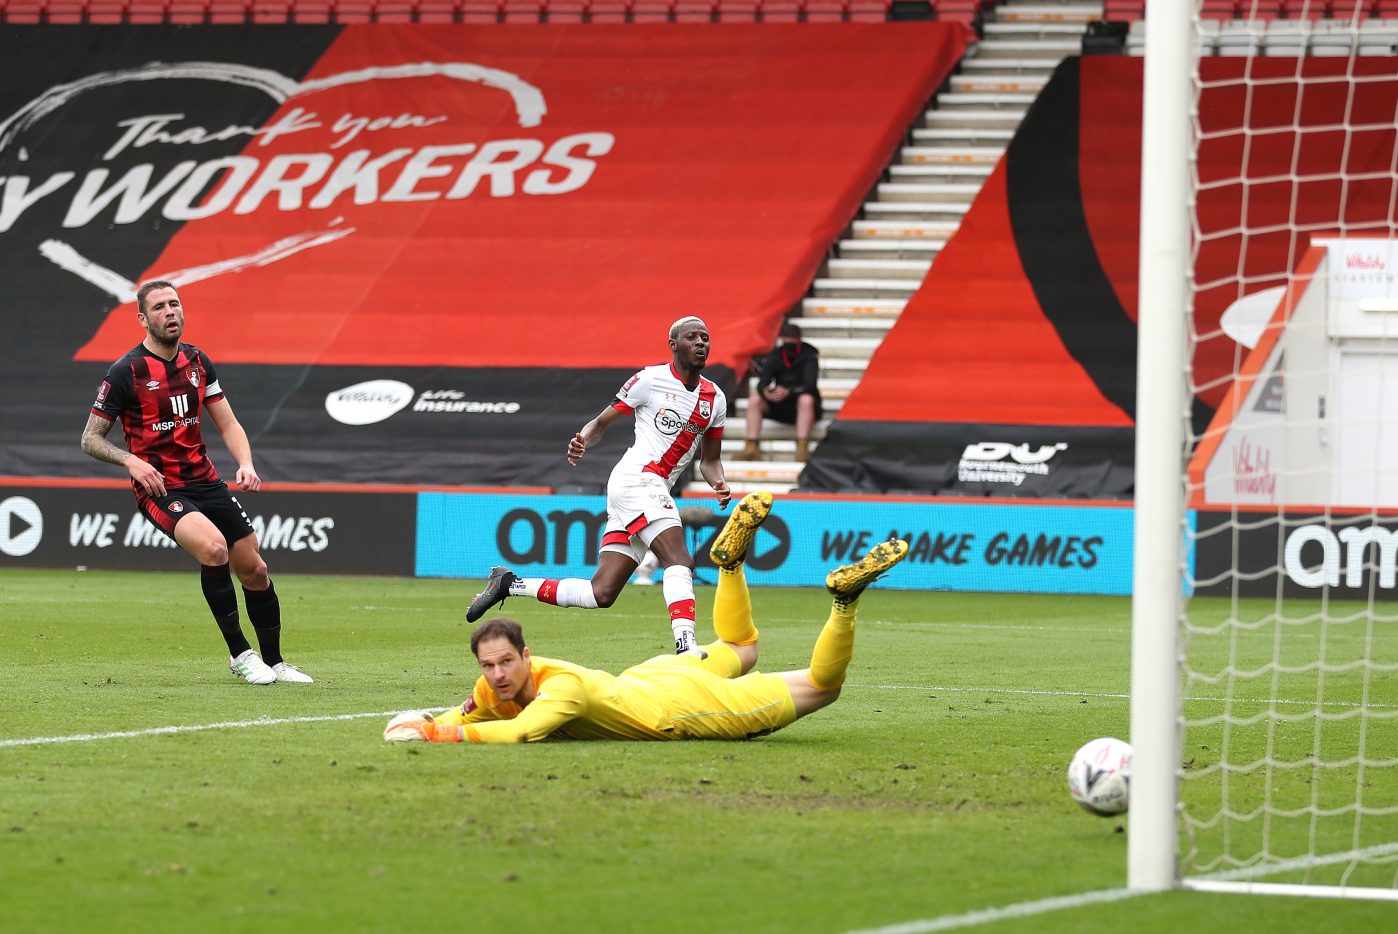 FA Cup Quarter-Final fixture between Bournemouth and Southampton - Djenepo scores